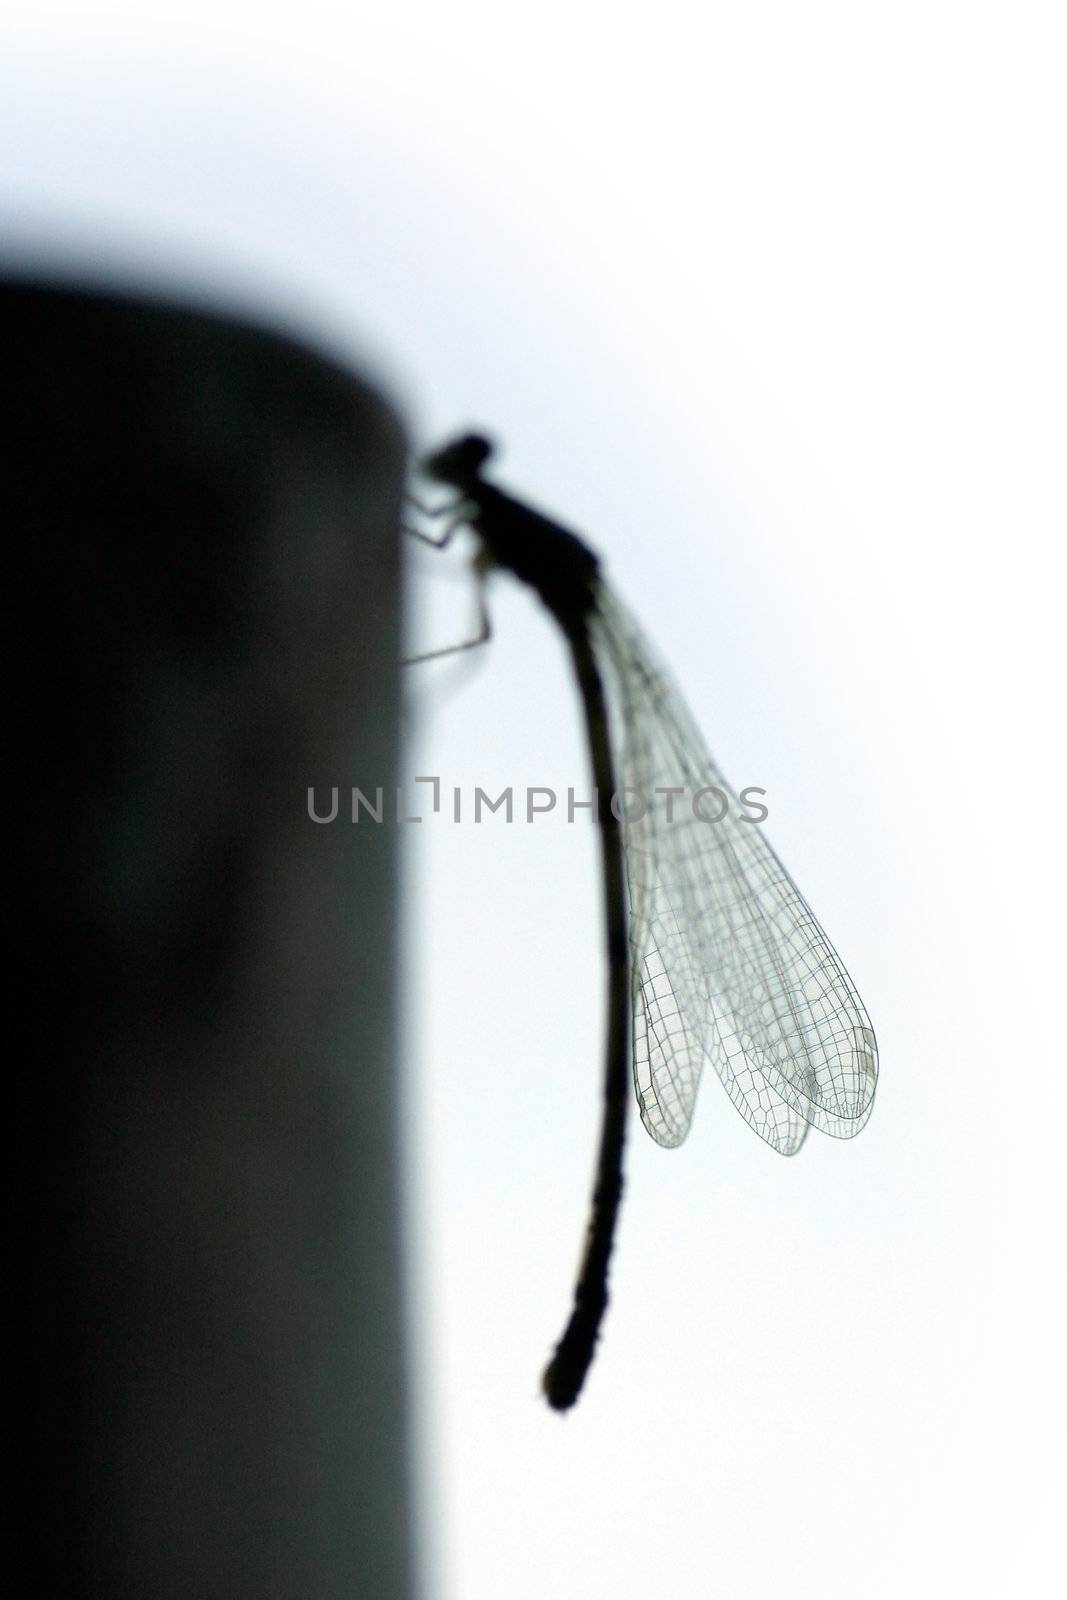 Dragonfly on a pole